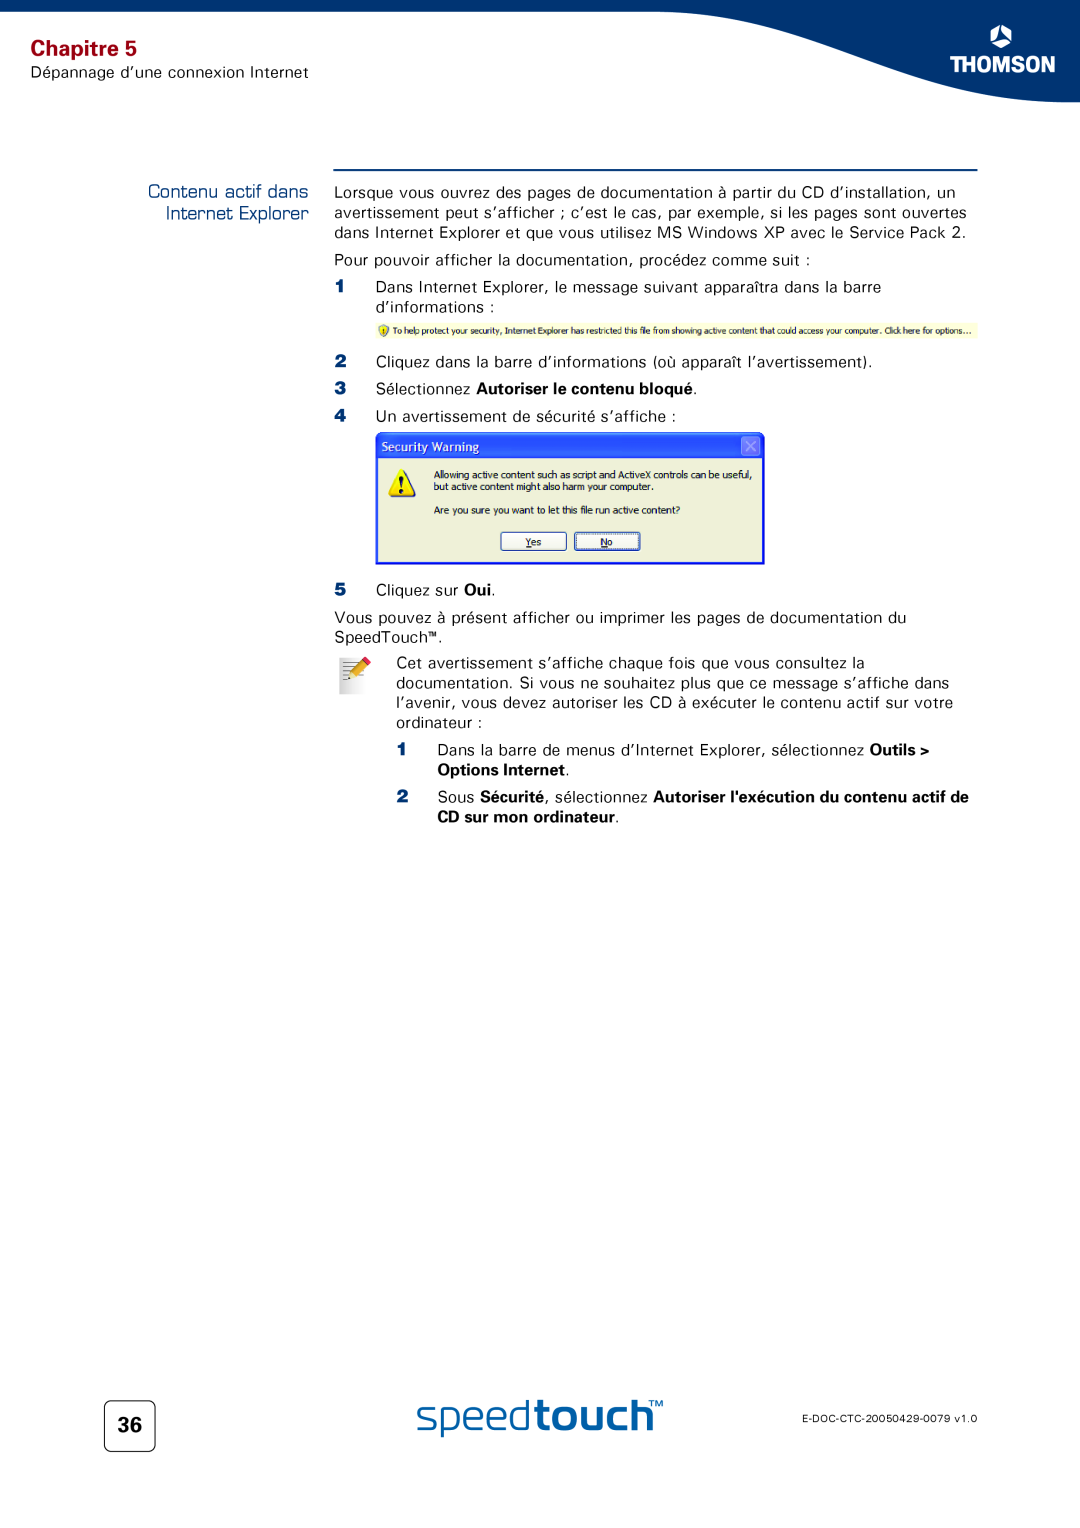 Technicolor - Thomson 716V5 (WL) manual Contenu actif dans Internet Explorer, Chapitre 